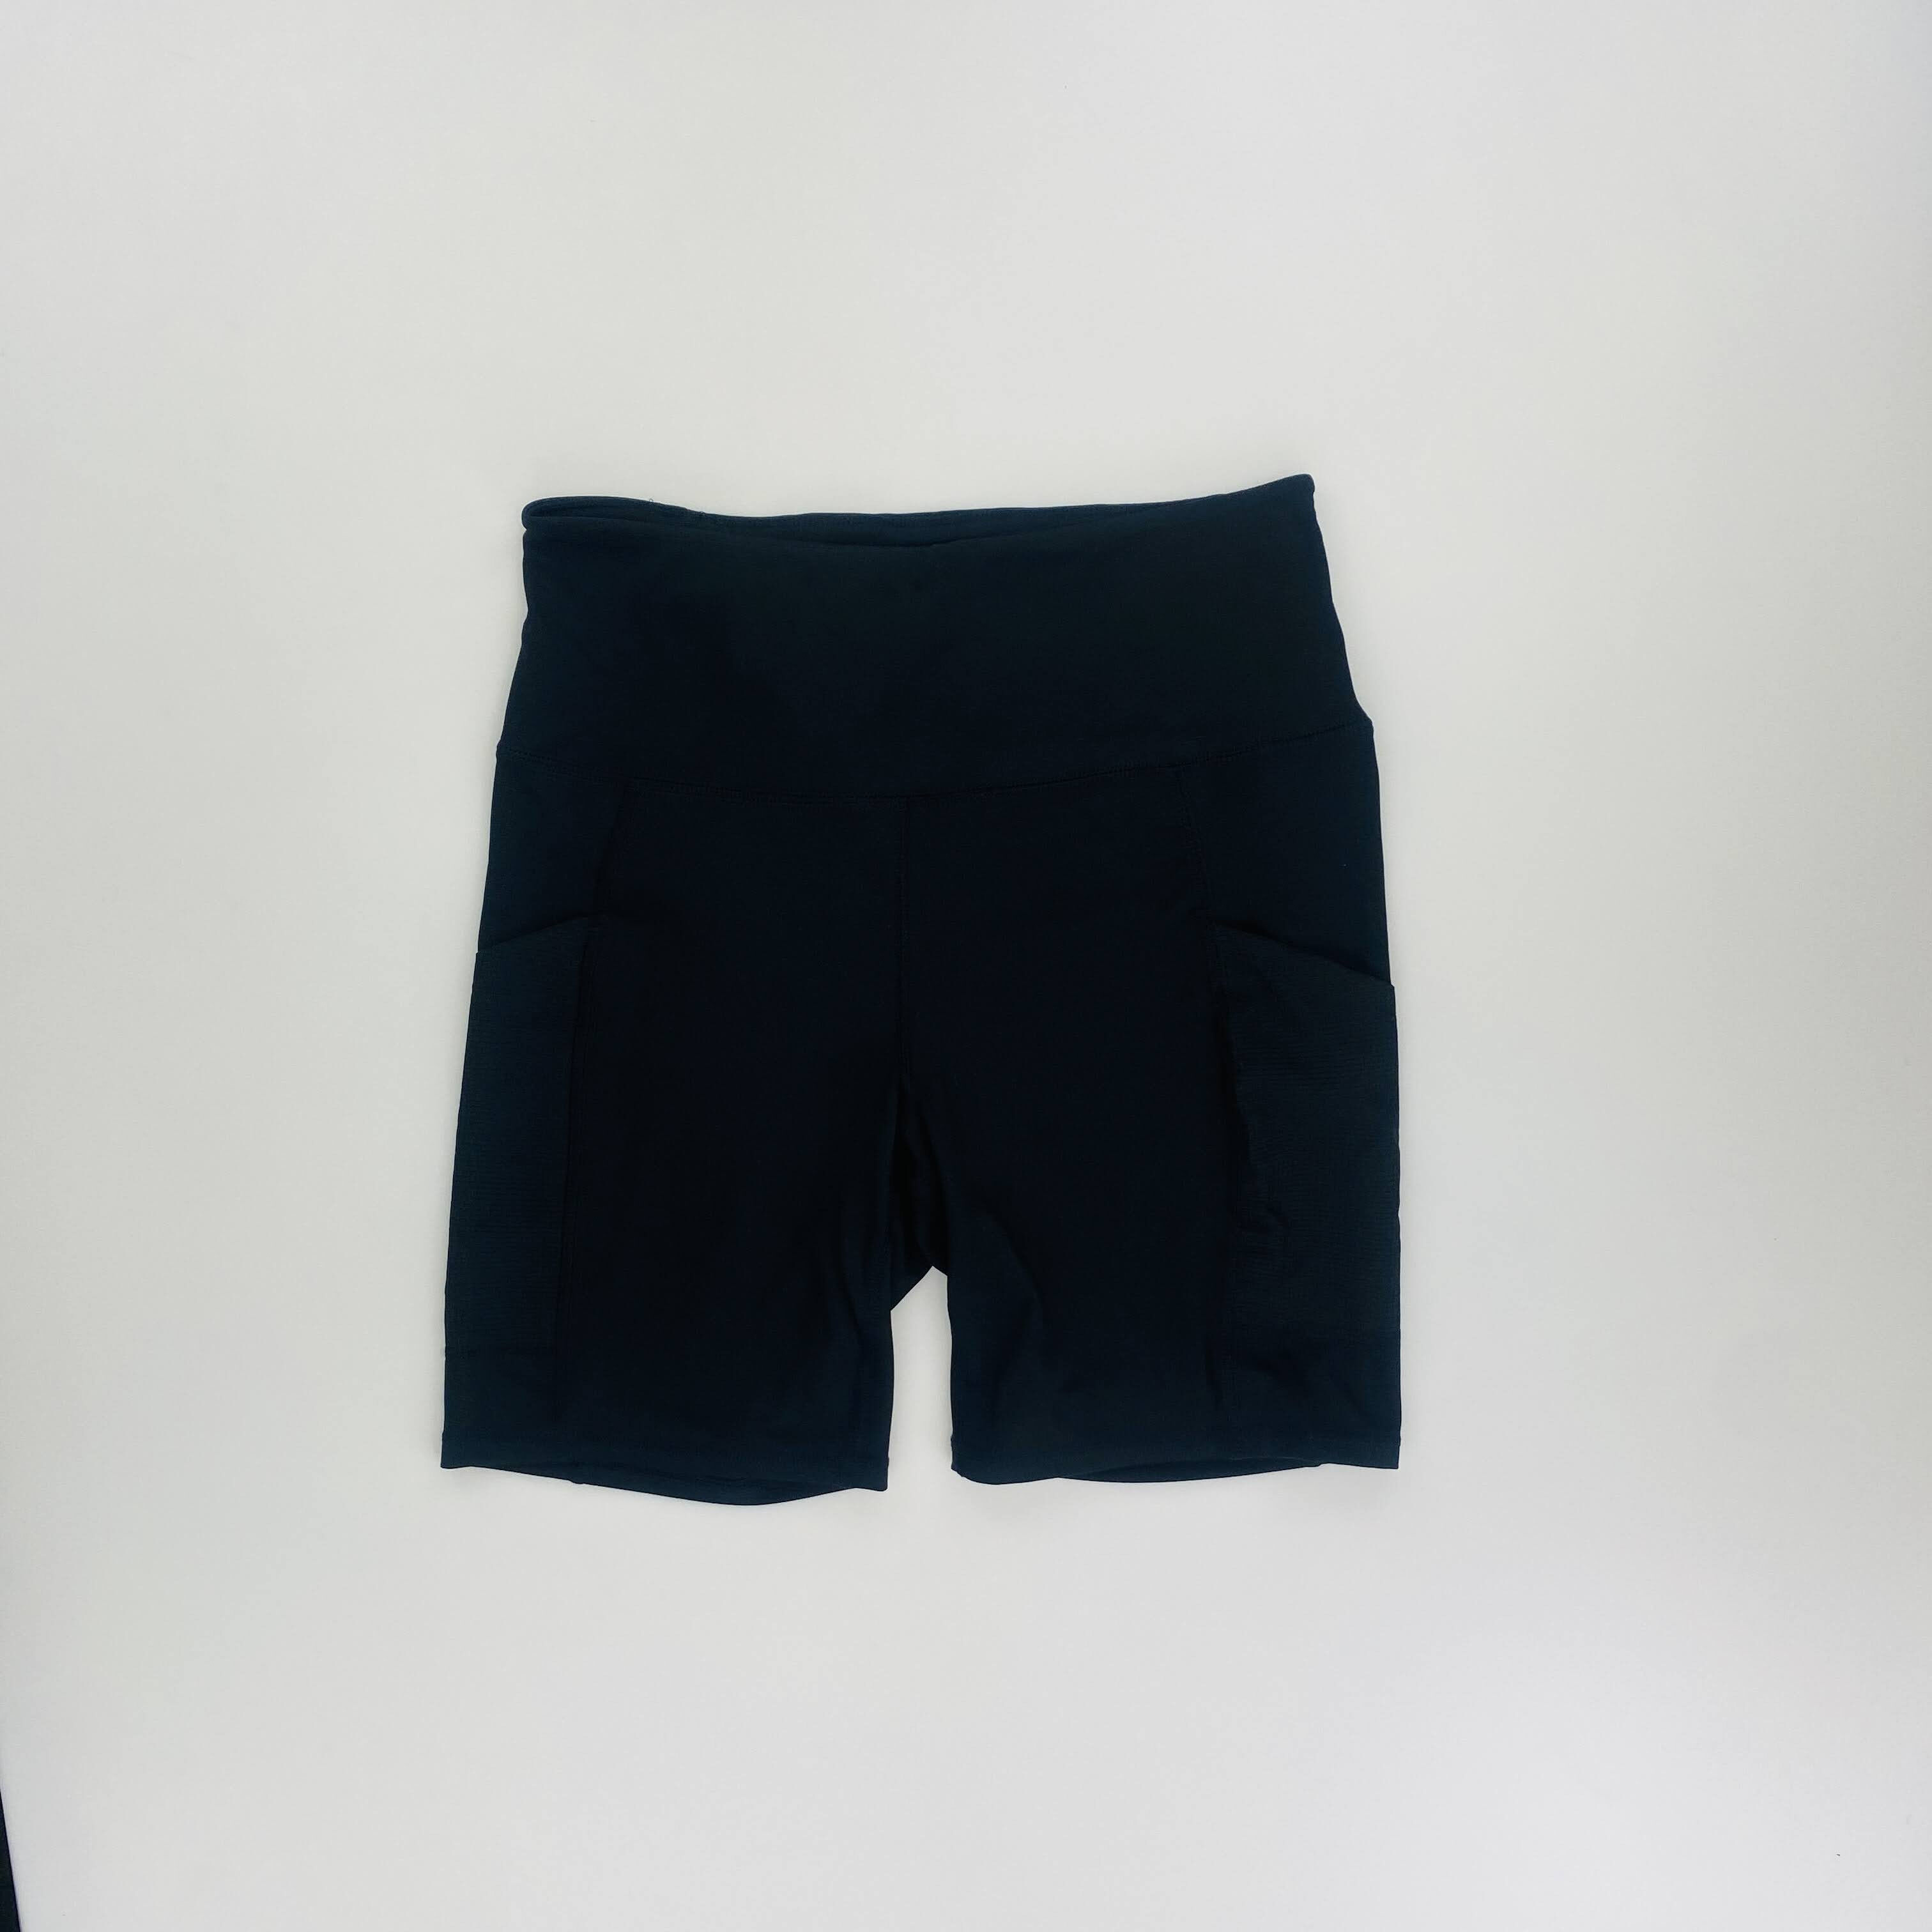 Wrangler Compression Short - Second Hand Shorts - Women's - Black - M | Hardloop